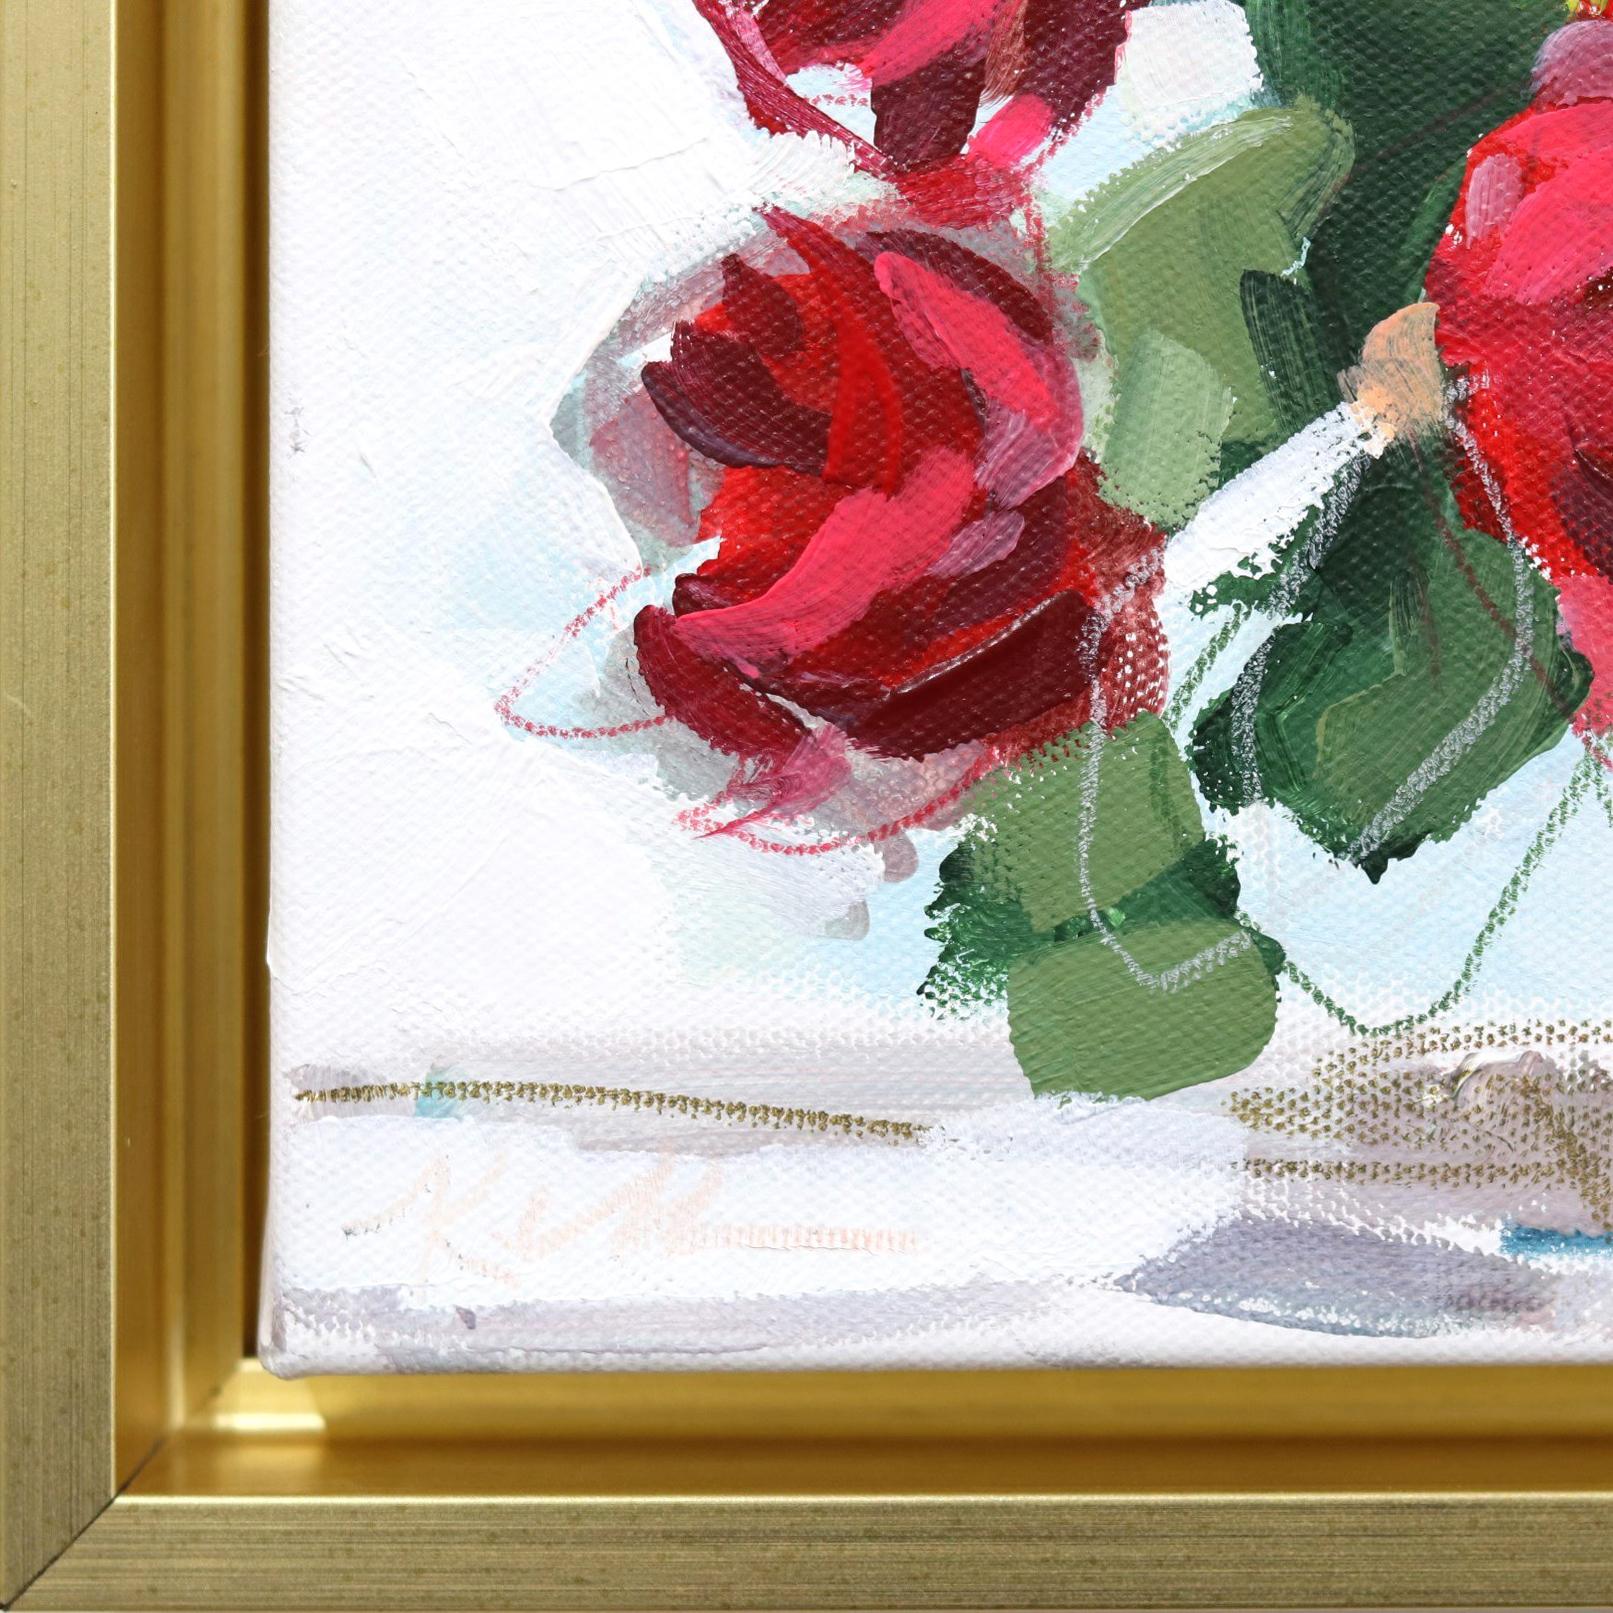 You Deserve More Than A Dozen Roses  - Original Framed Floral Painting on Canvas For Sale 5